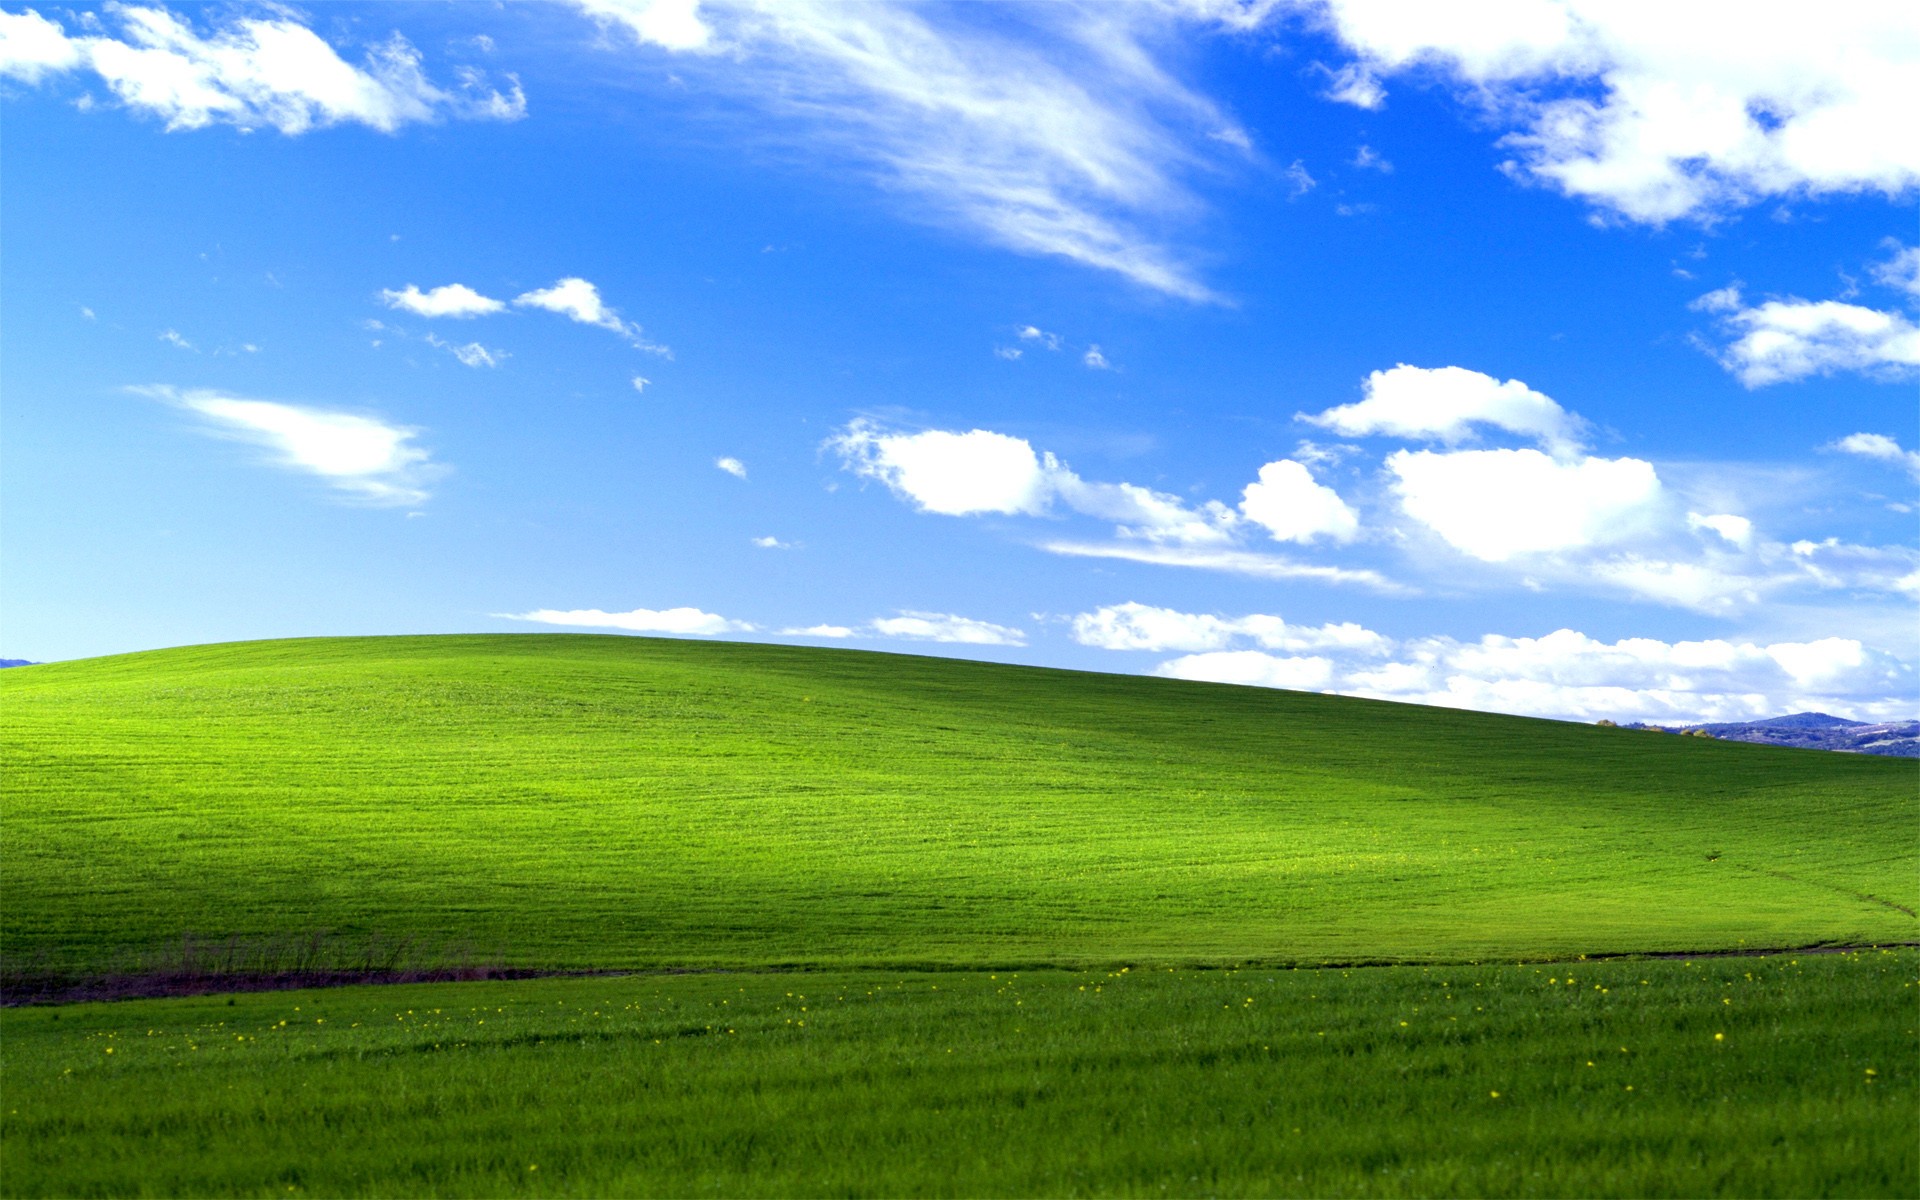 Windows 95 wallpaper ·① Download free full HD backgrounds for desktop